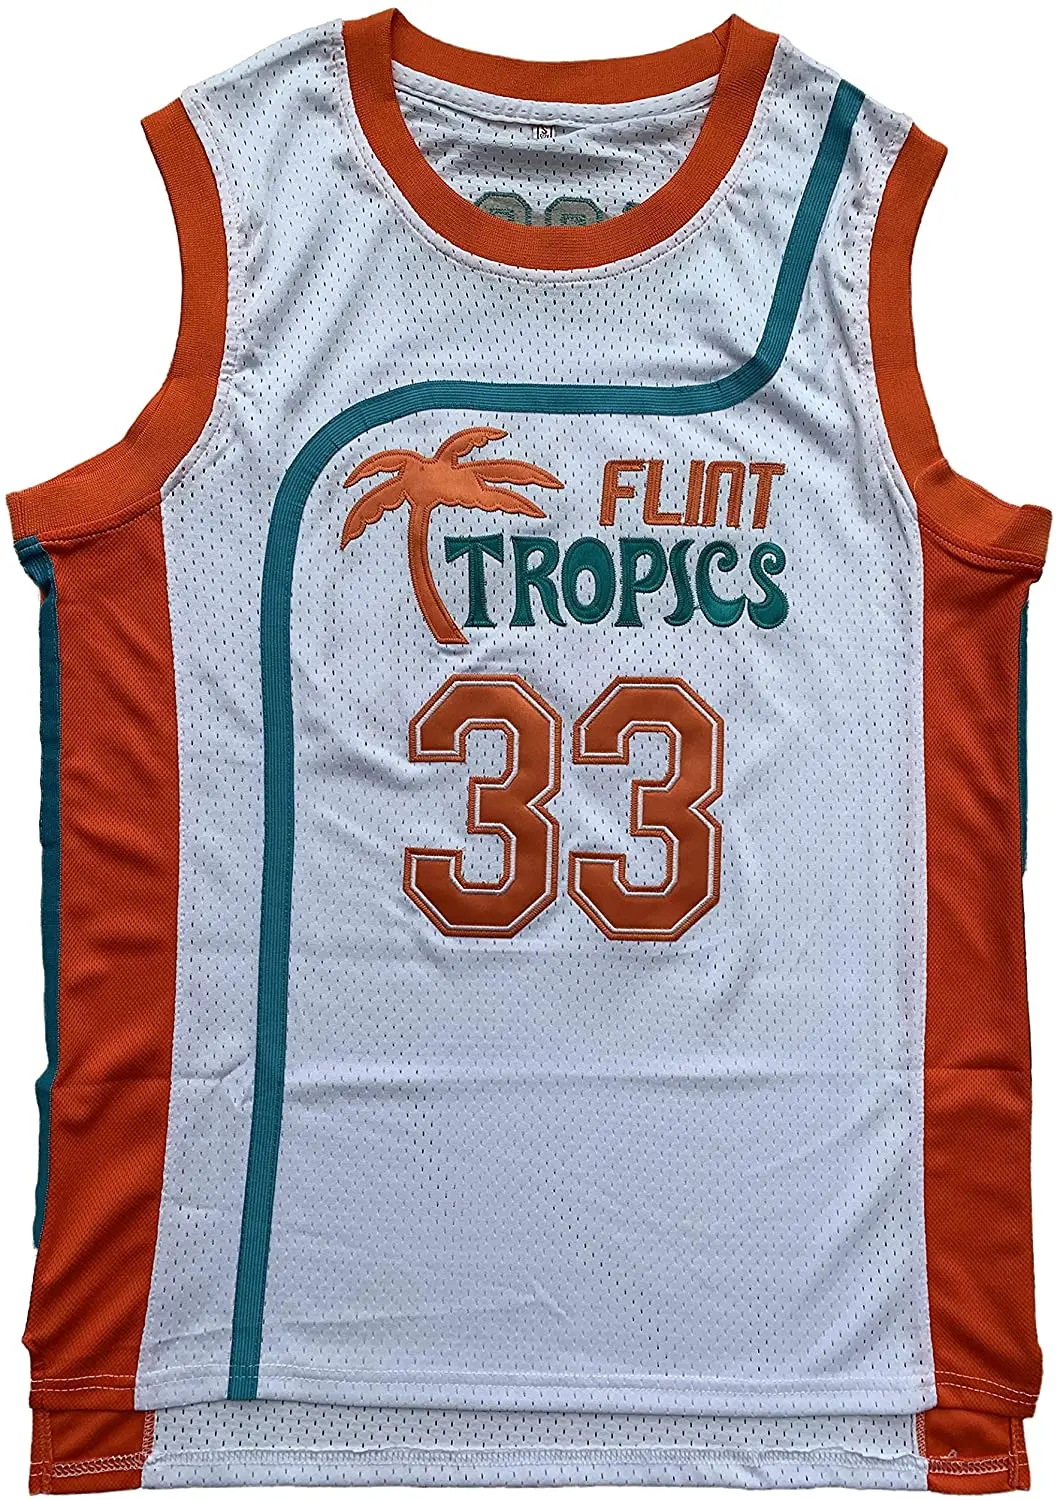 Flint Tropics Semi Pro Jackie Moon Basketball Uniform Costume